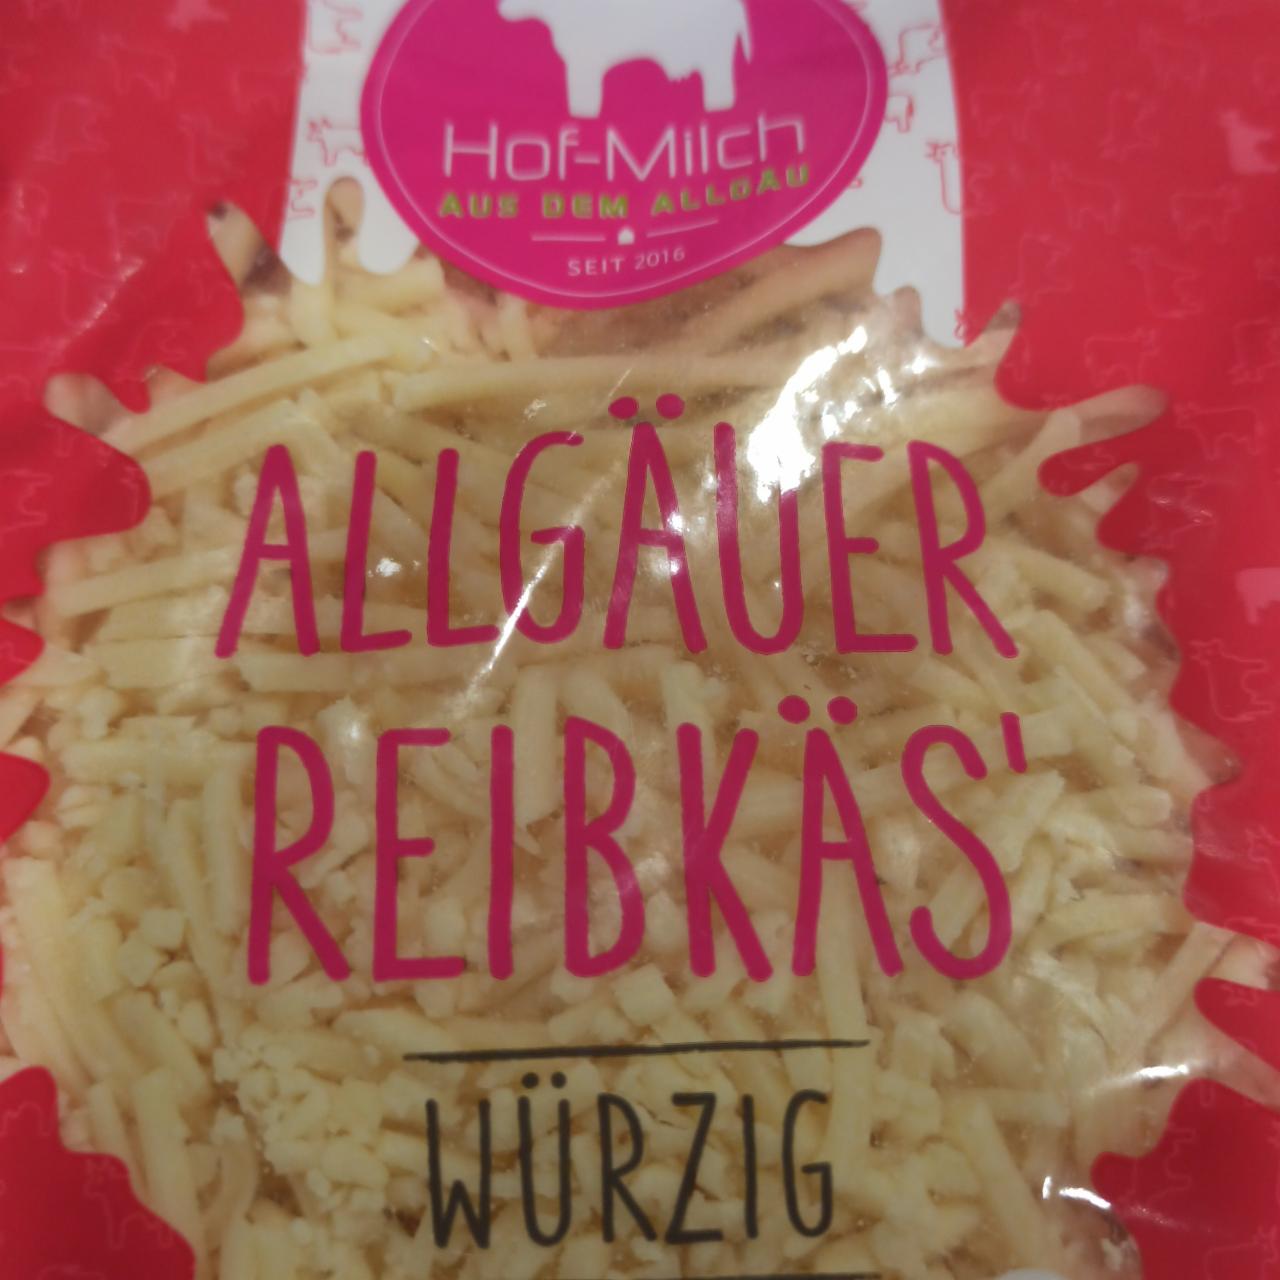 Fotografie - Allgäuer reibkäs würzig Hof-Milch